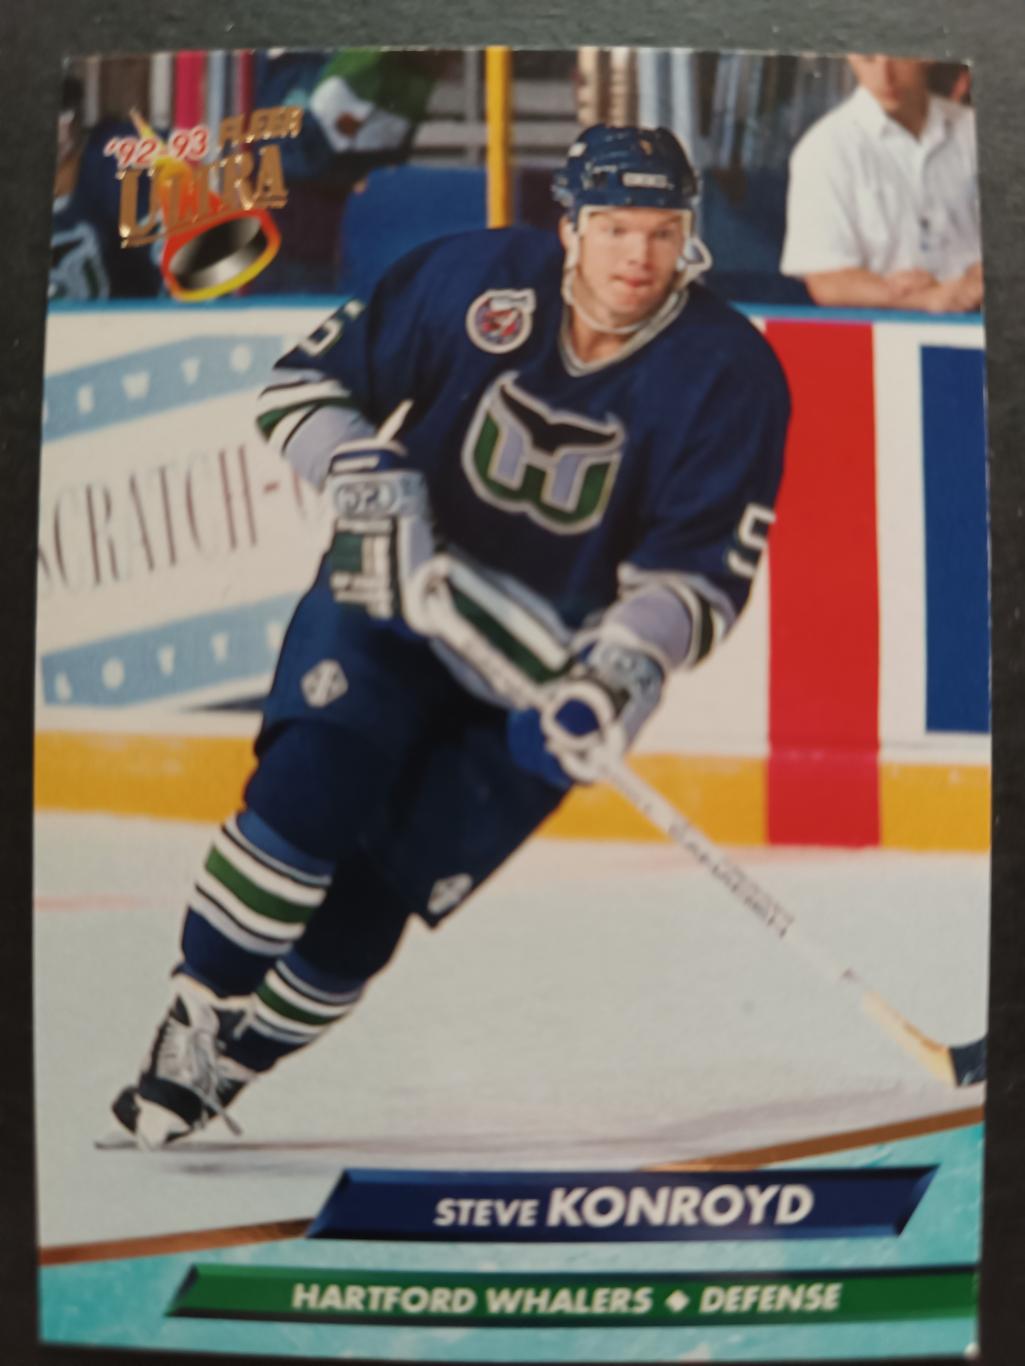 ХОККЕЙ КАРТОЧКА НХЛ FLEER ULTRA 1992-93 NHL STEVE KONROYD HARTFORD WHALERS #300